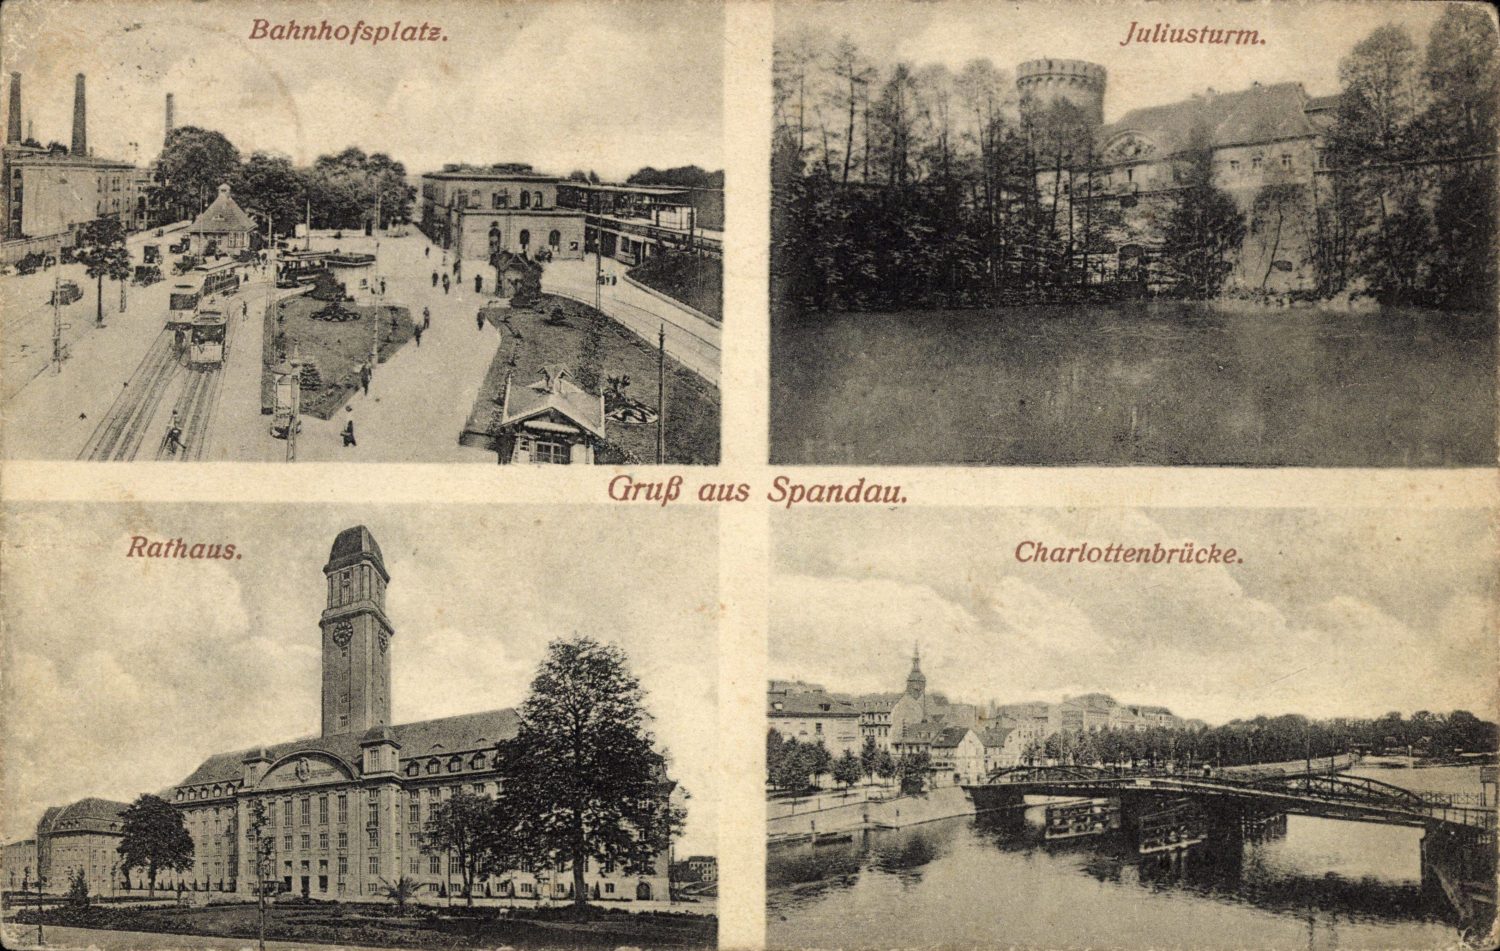 Gruß aus Spandau. Spandau, Bahnhofsplatz, Juliusturm, Rathaus, Charlottenbrücke, Postkarte um 1920.